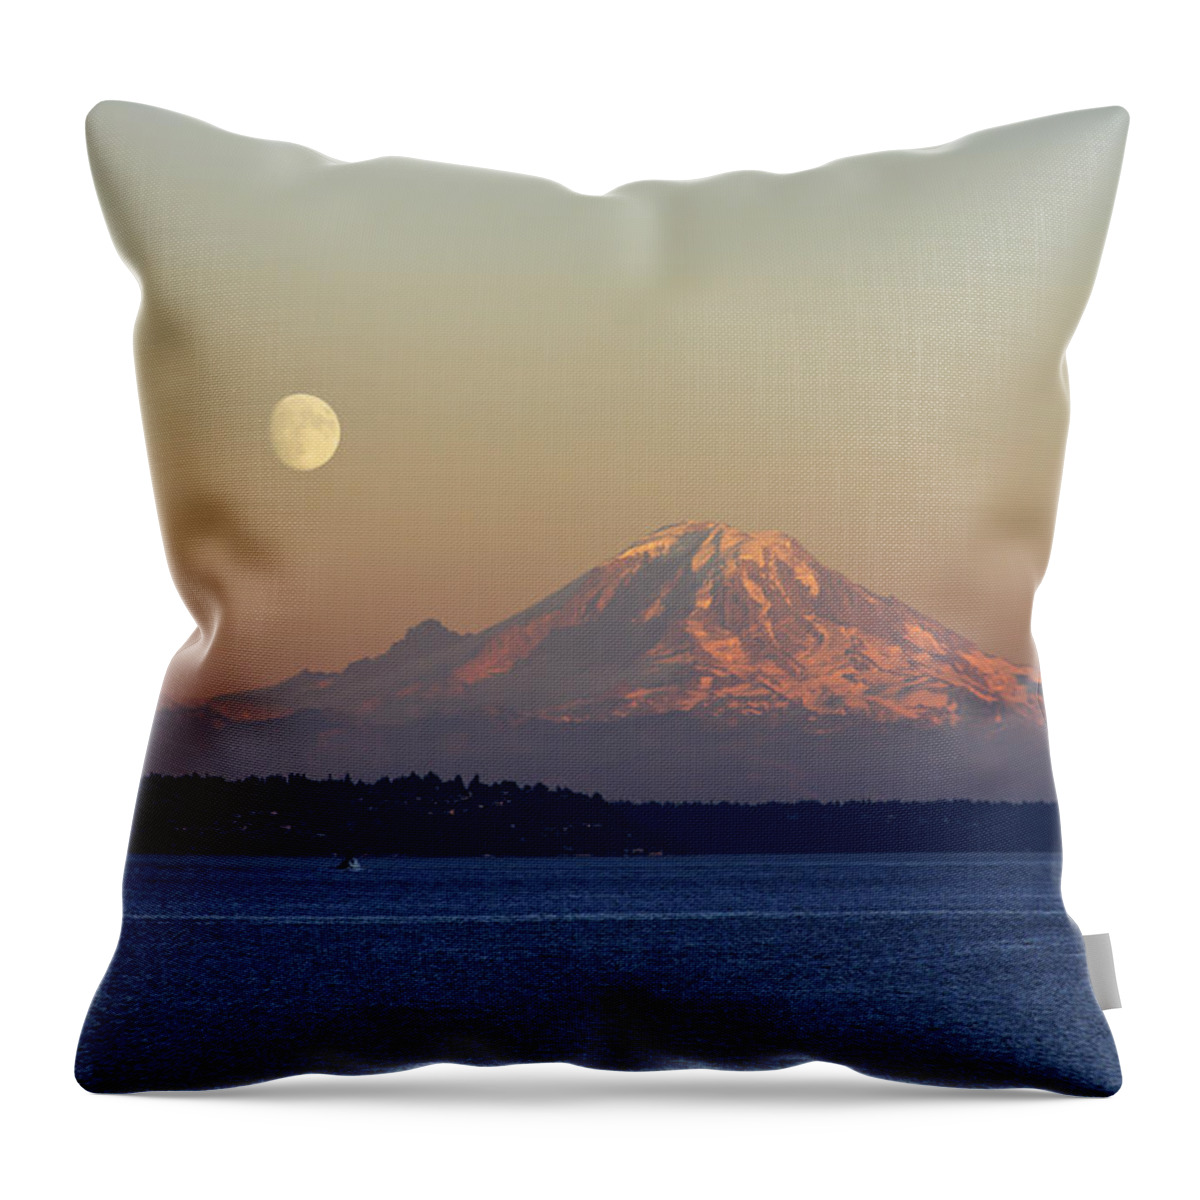 #faatoppicks Throw Pillow featuring the photograph Moon Over Rainier by Adam Romanowicz